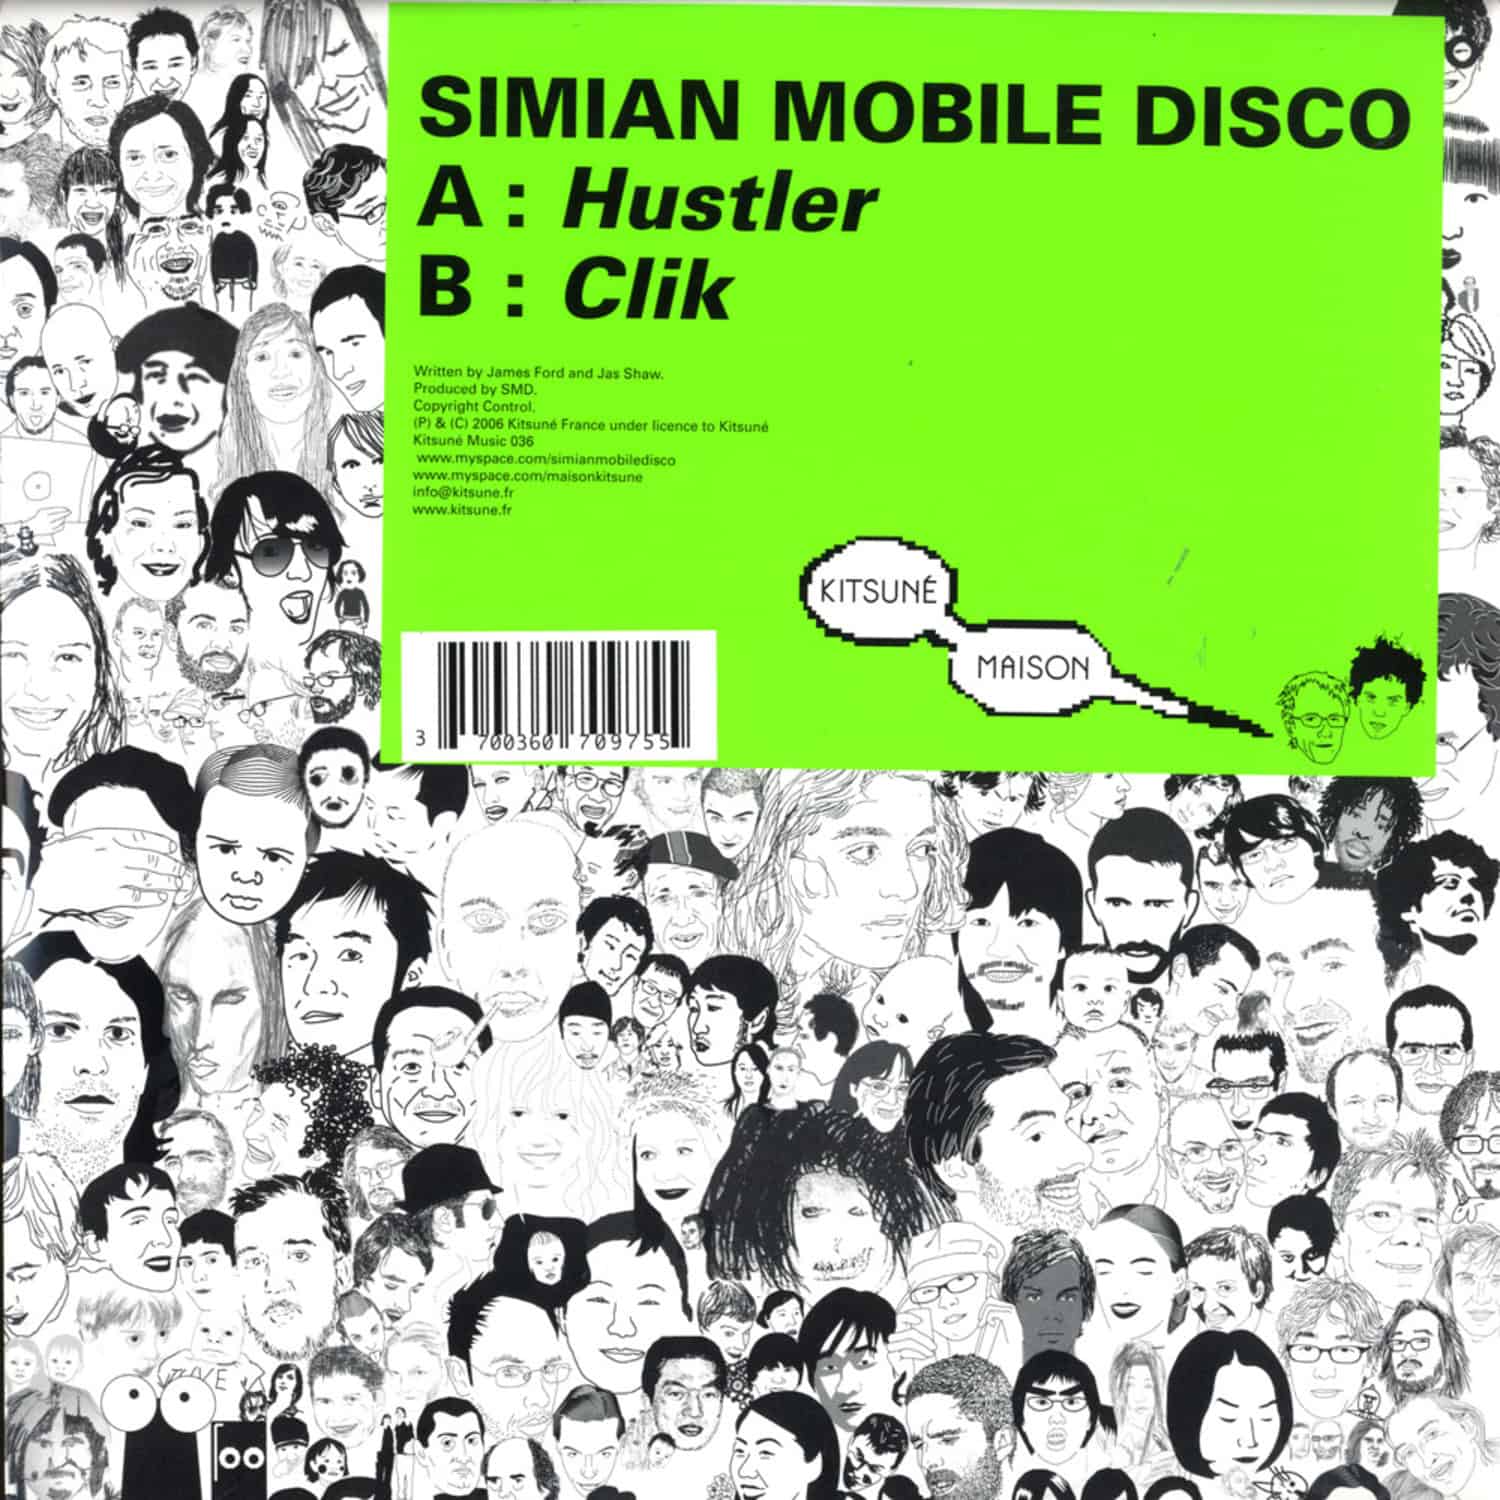 Simian Mobile Disco - HUSTLER